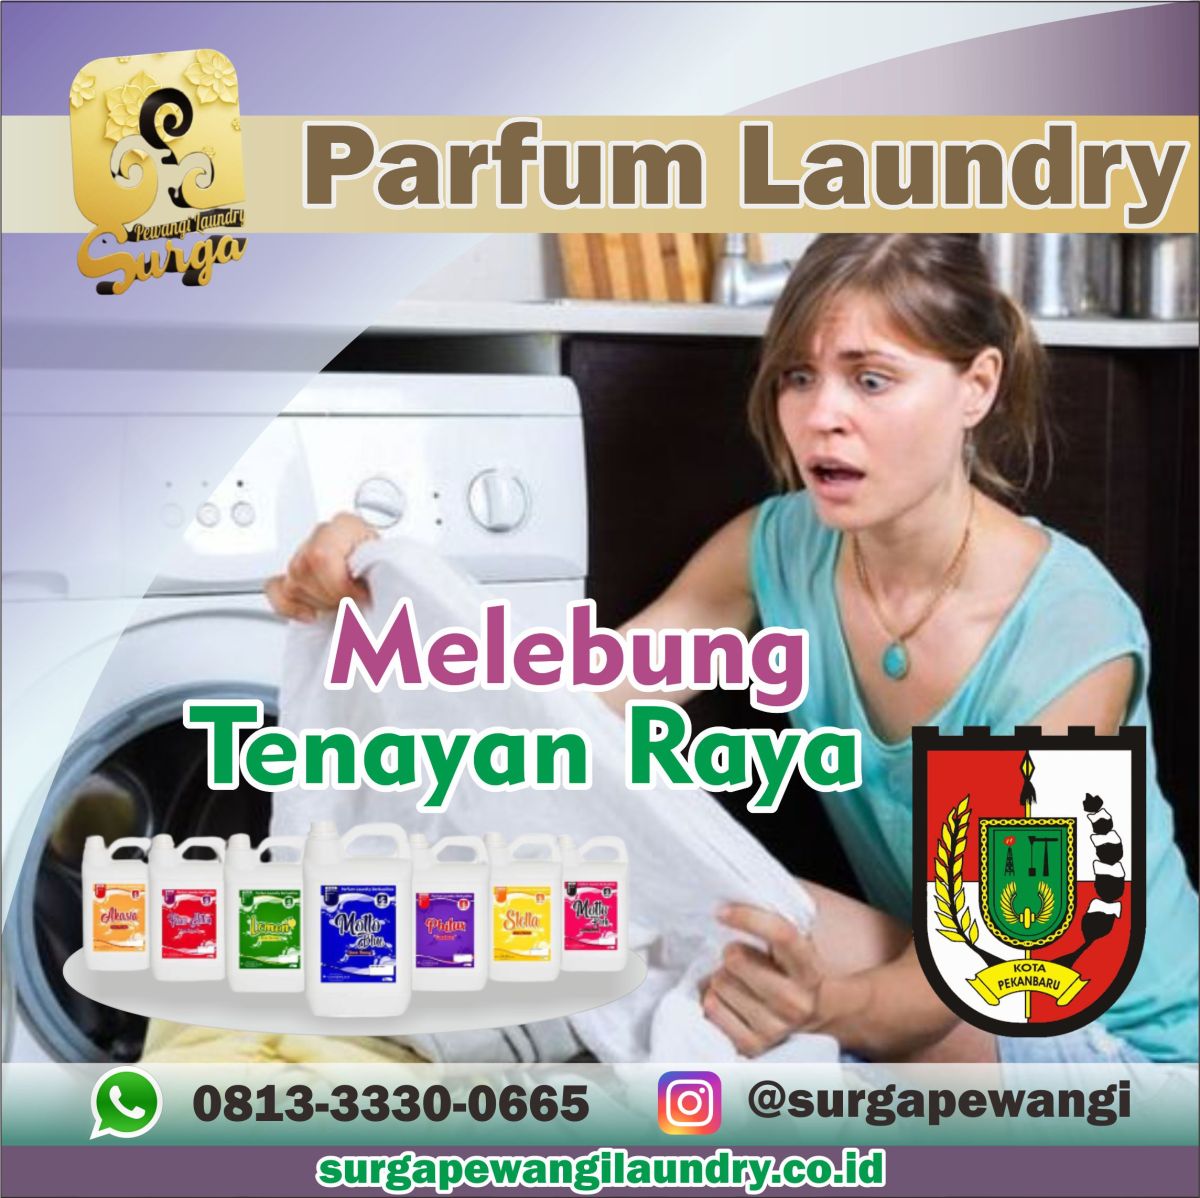 Parfum Laundry Melebung, Tenayan Raya